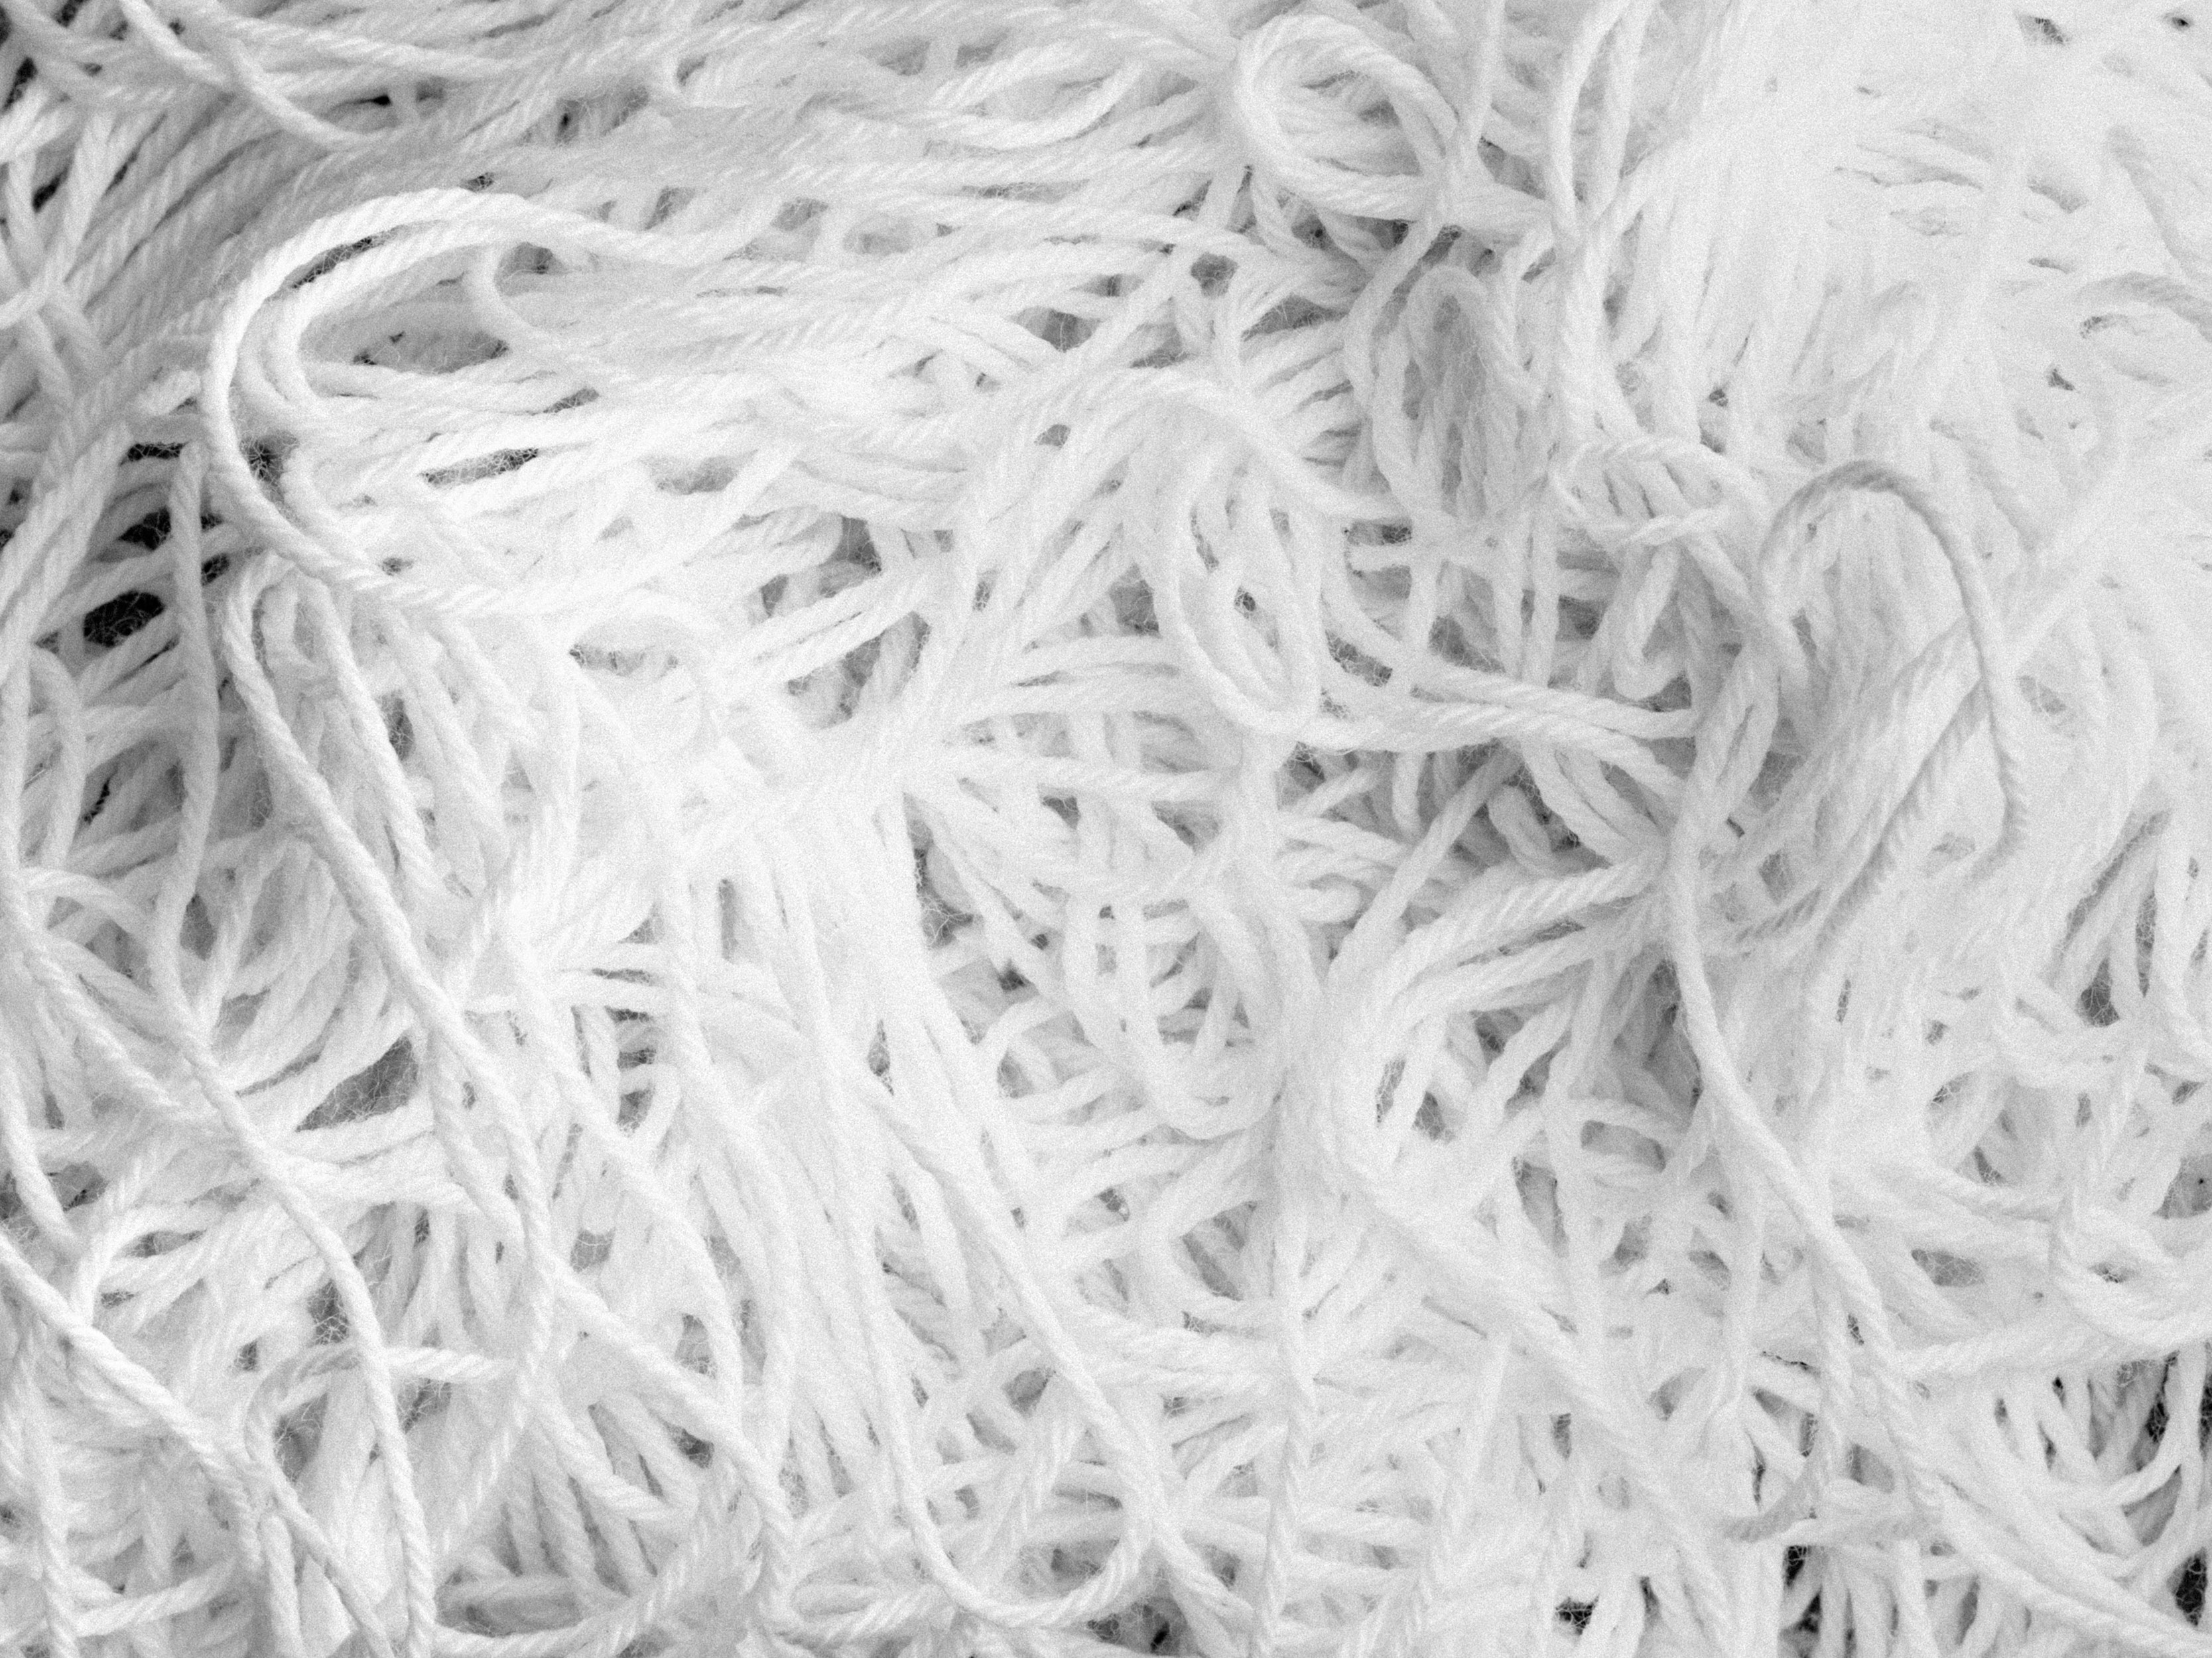 Black and white photo of yarn